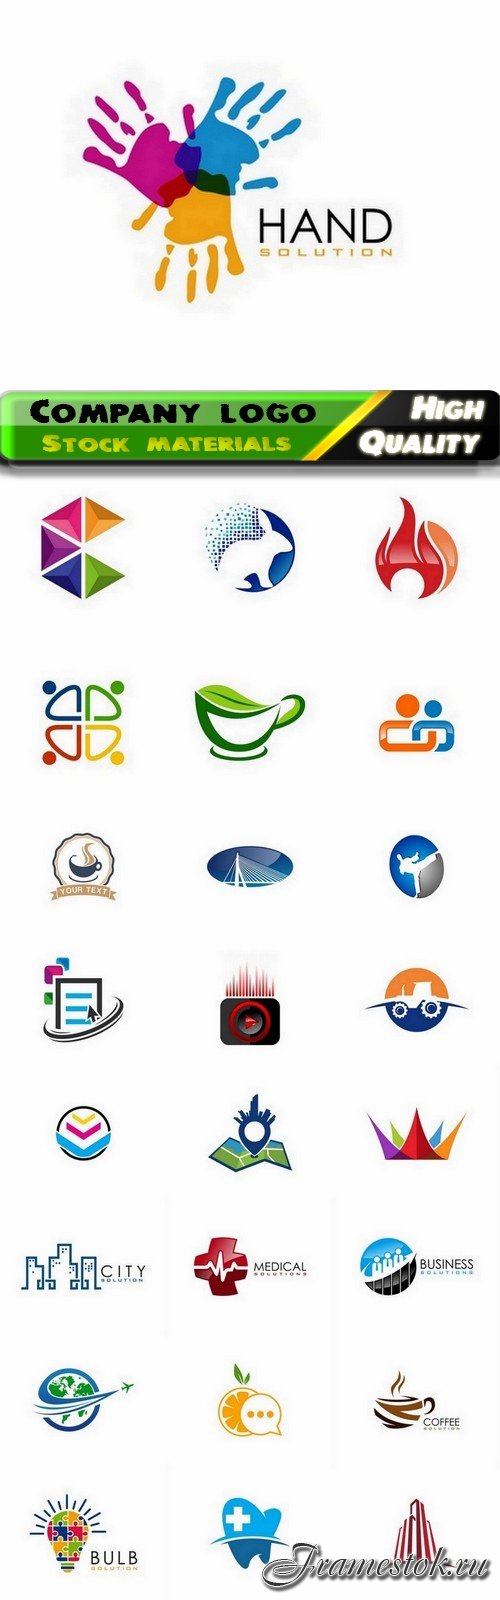 Business corporate logo and company identity badge emblem 6 25 Eps